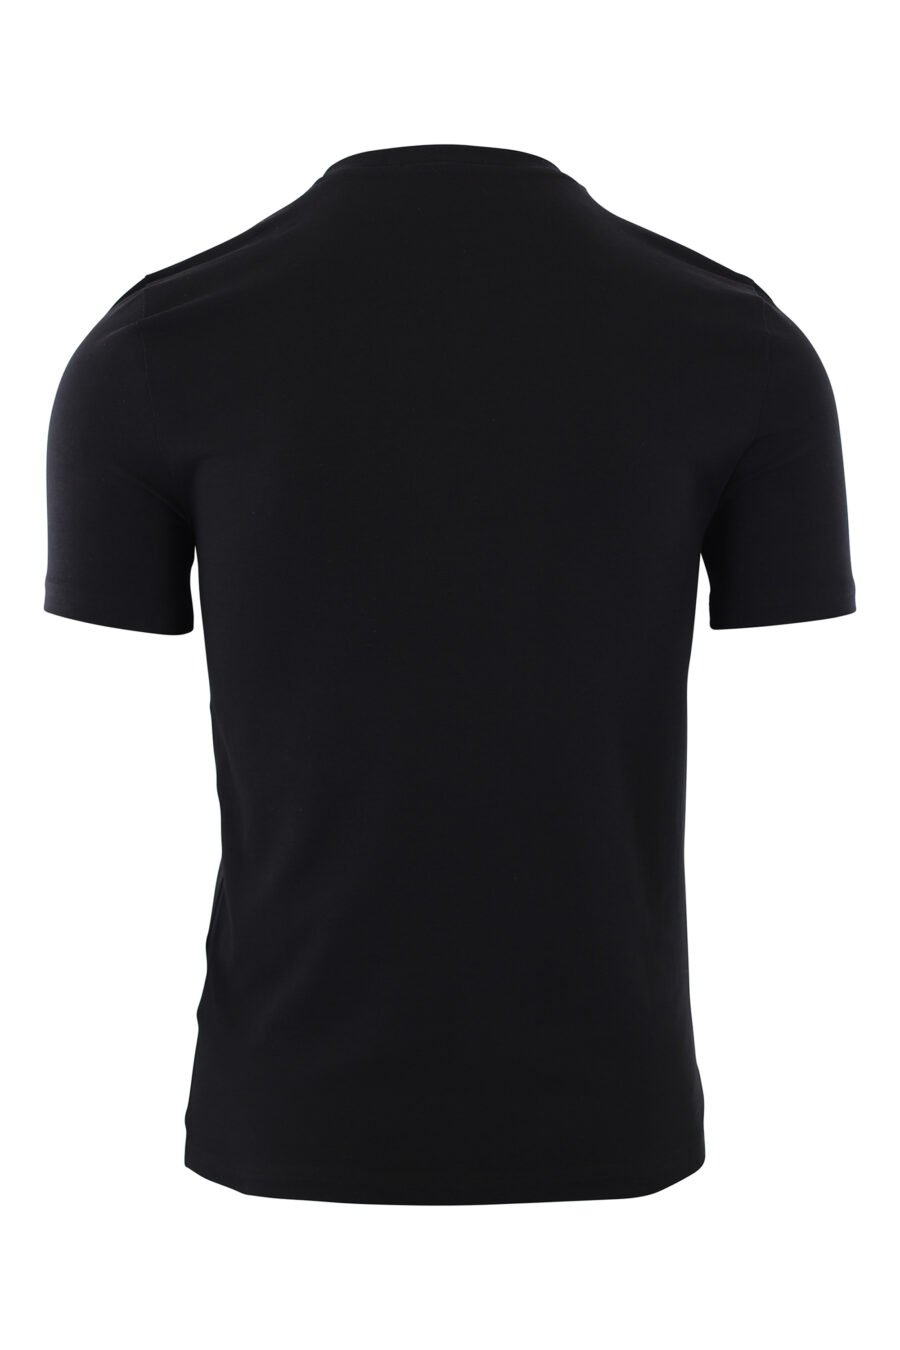 T-shirt preta com logótipo duplo "smiley" maxi - IMG 2426